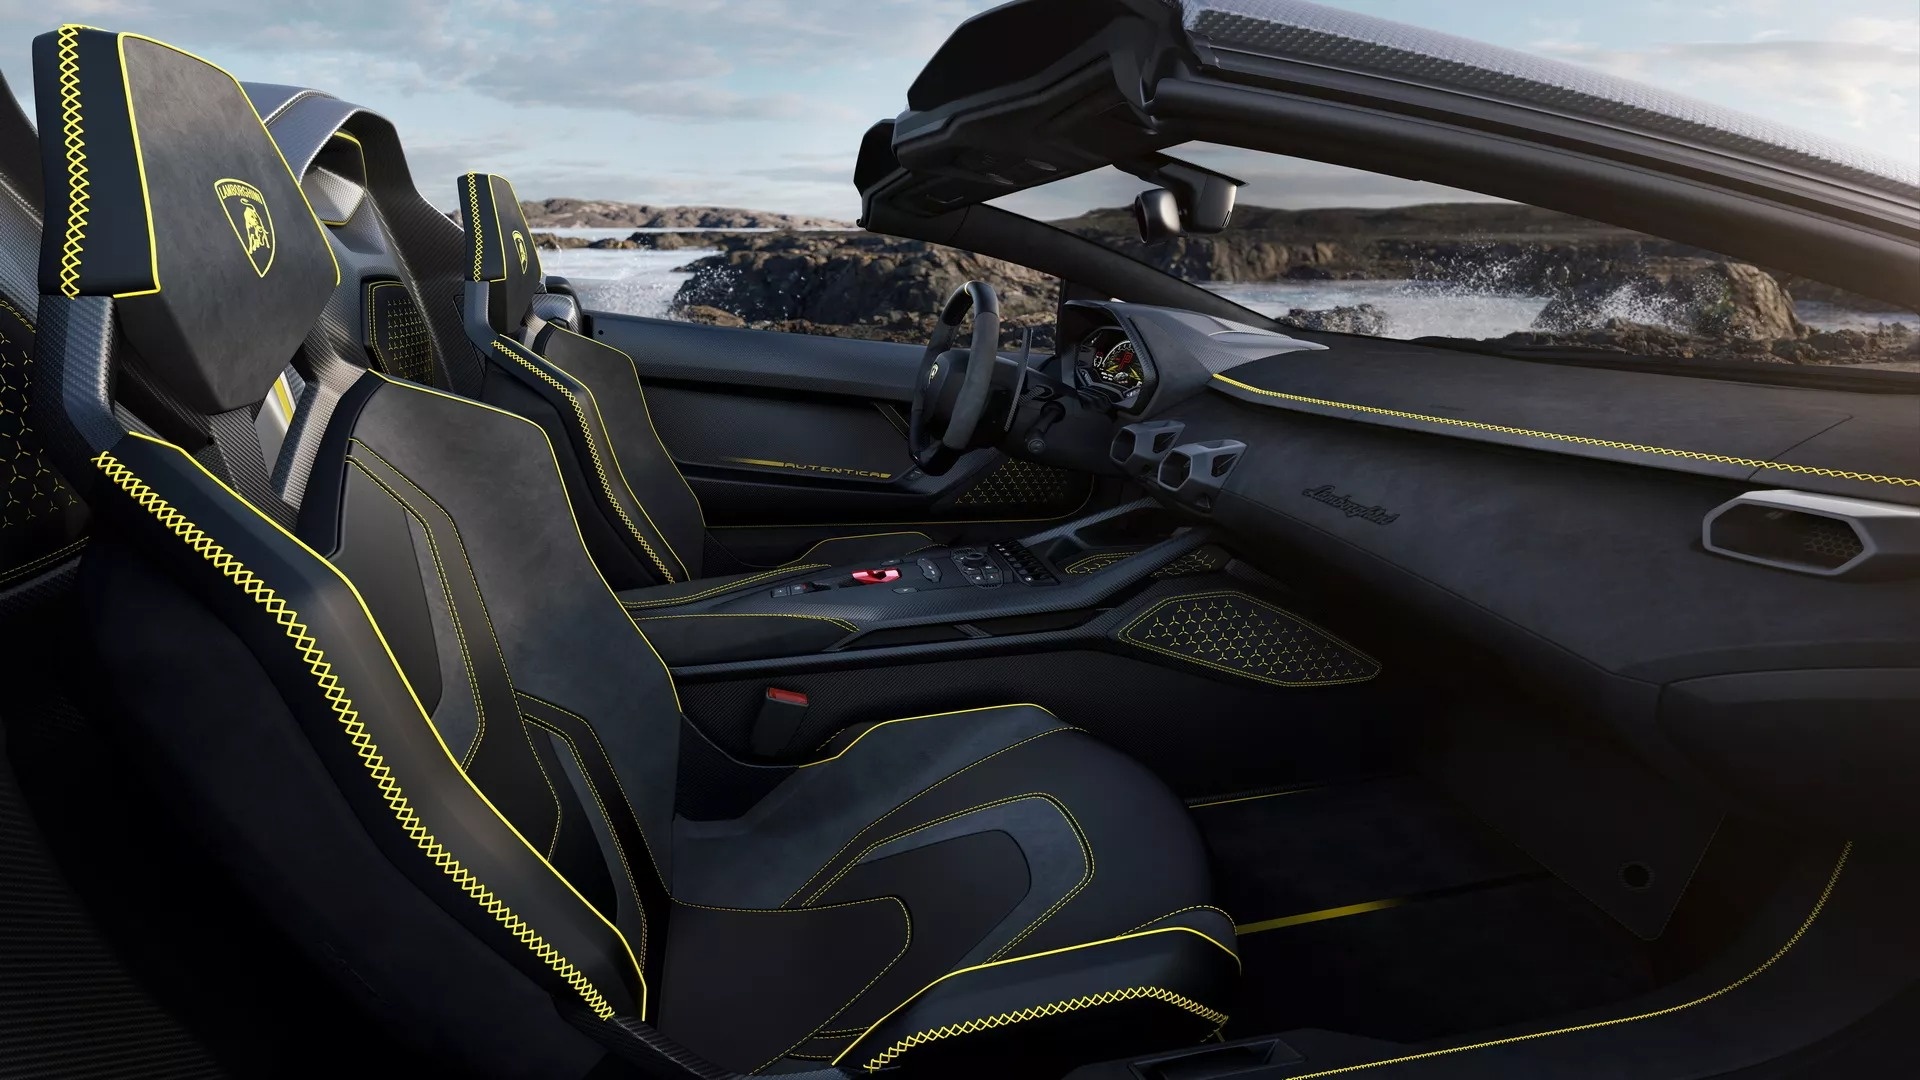 Chi tiết siêu xe Lamborghini Invencible và Autentica vừa ra mắt - ảnh 8